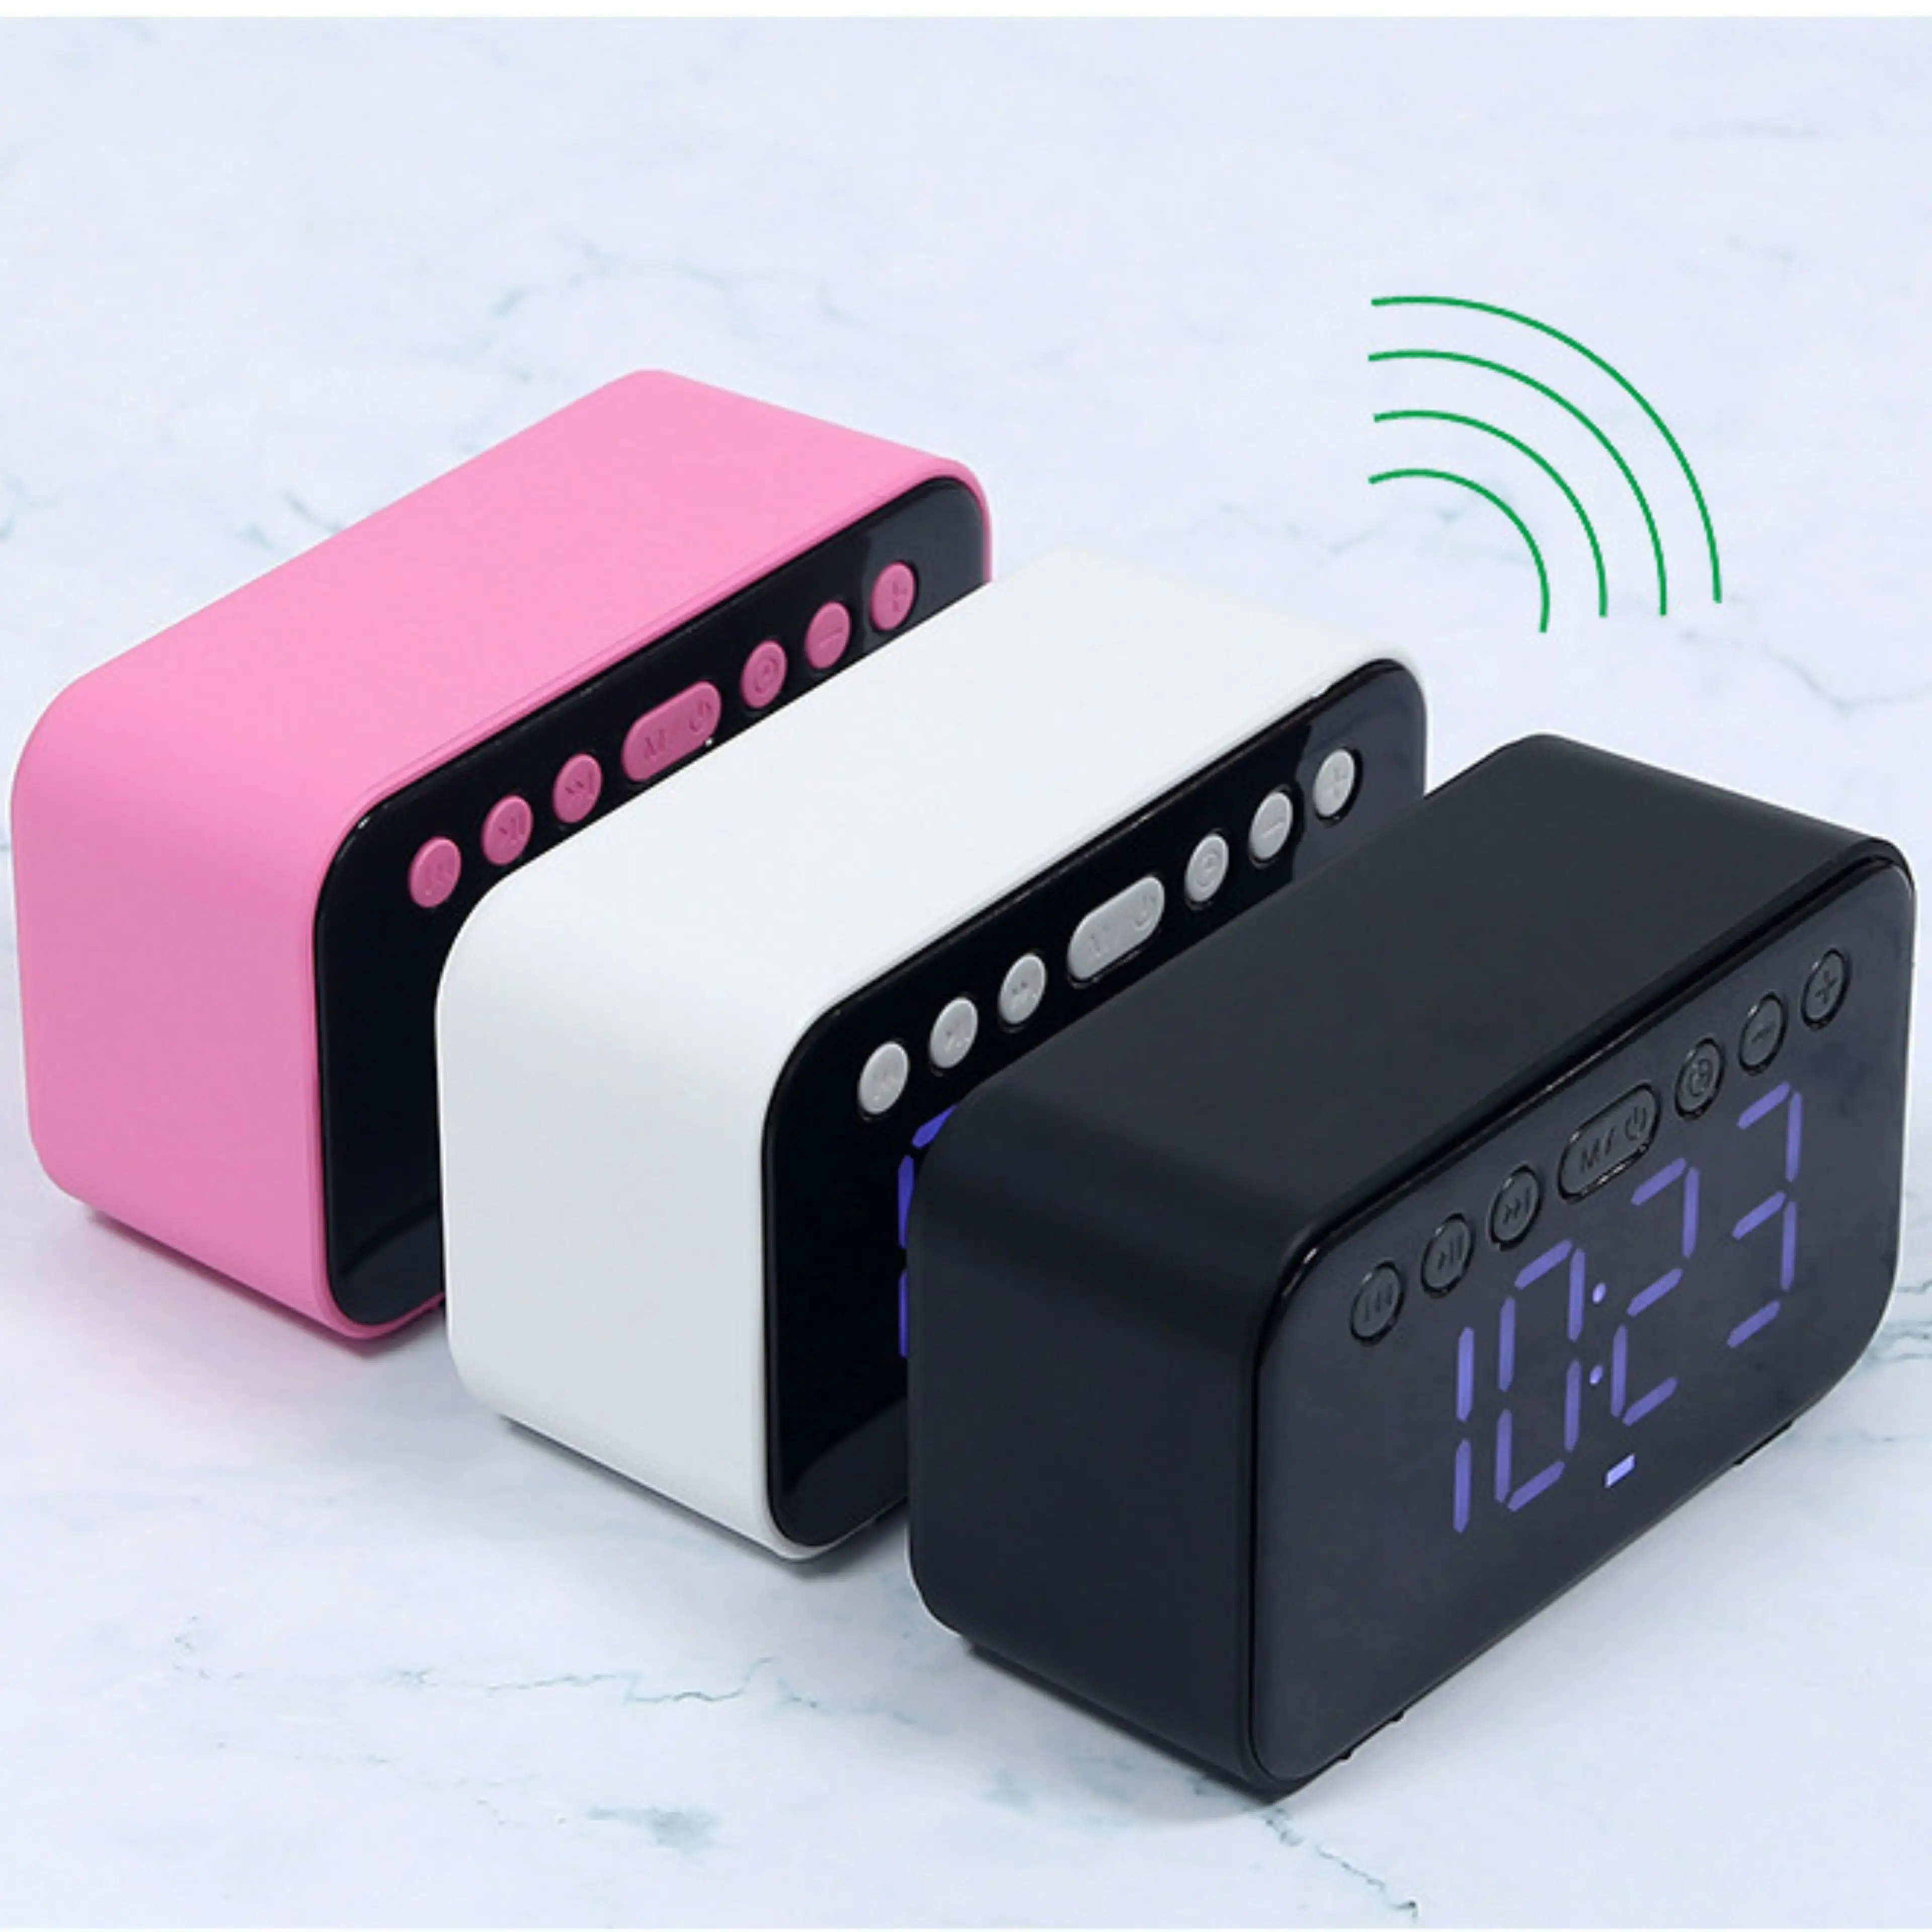 Speaker jam Alarm Bluetooth nirkabel, pengeras suara LED Digital dengan lampu malam, Input AUX Radio FM, mendukung kustomisasi